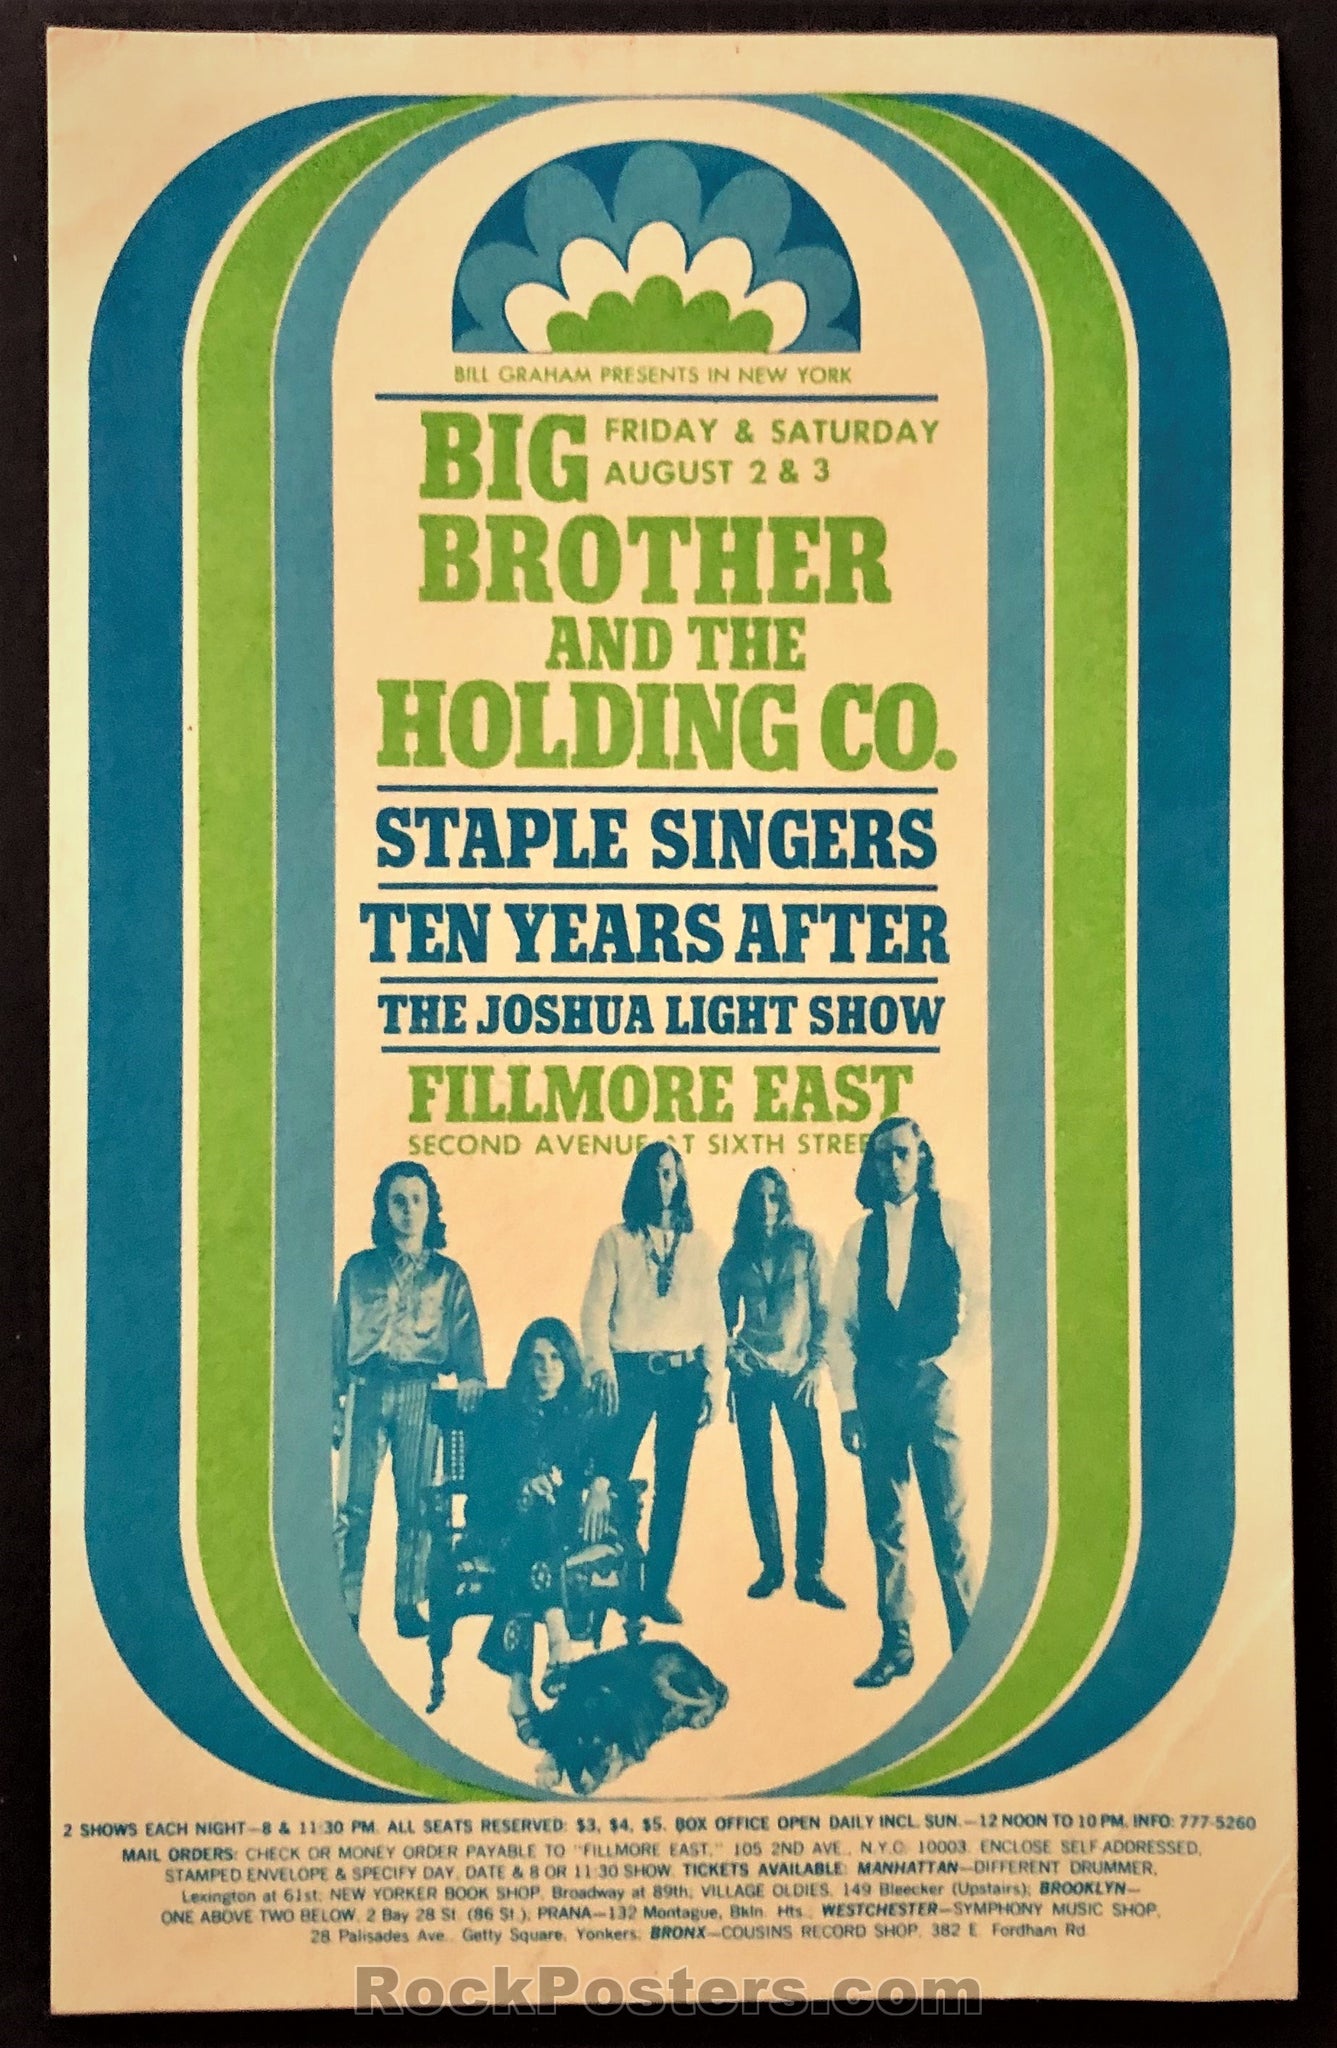 Auction - AOR-2.97 - Big Brother Janis Joplin - Fillmore East 1968 Postcard - Excellent